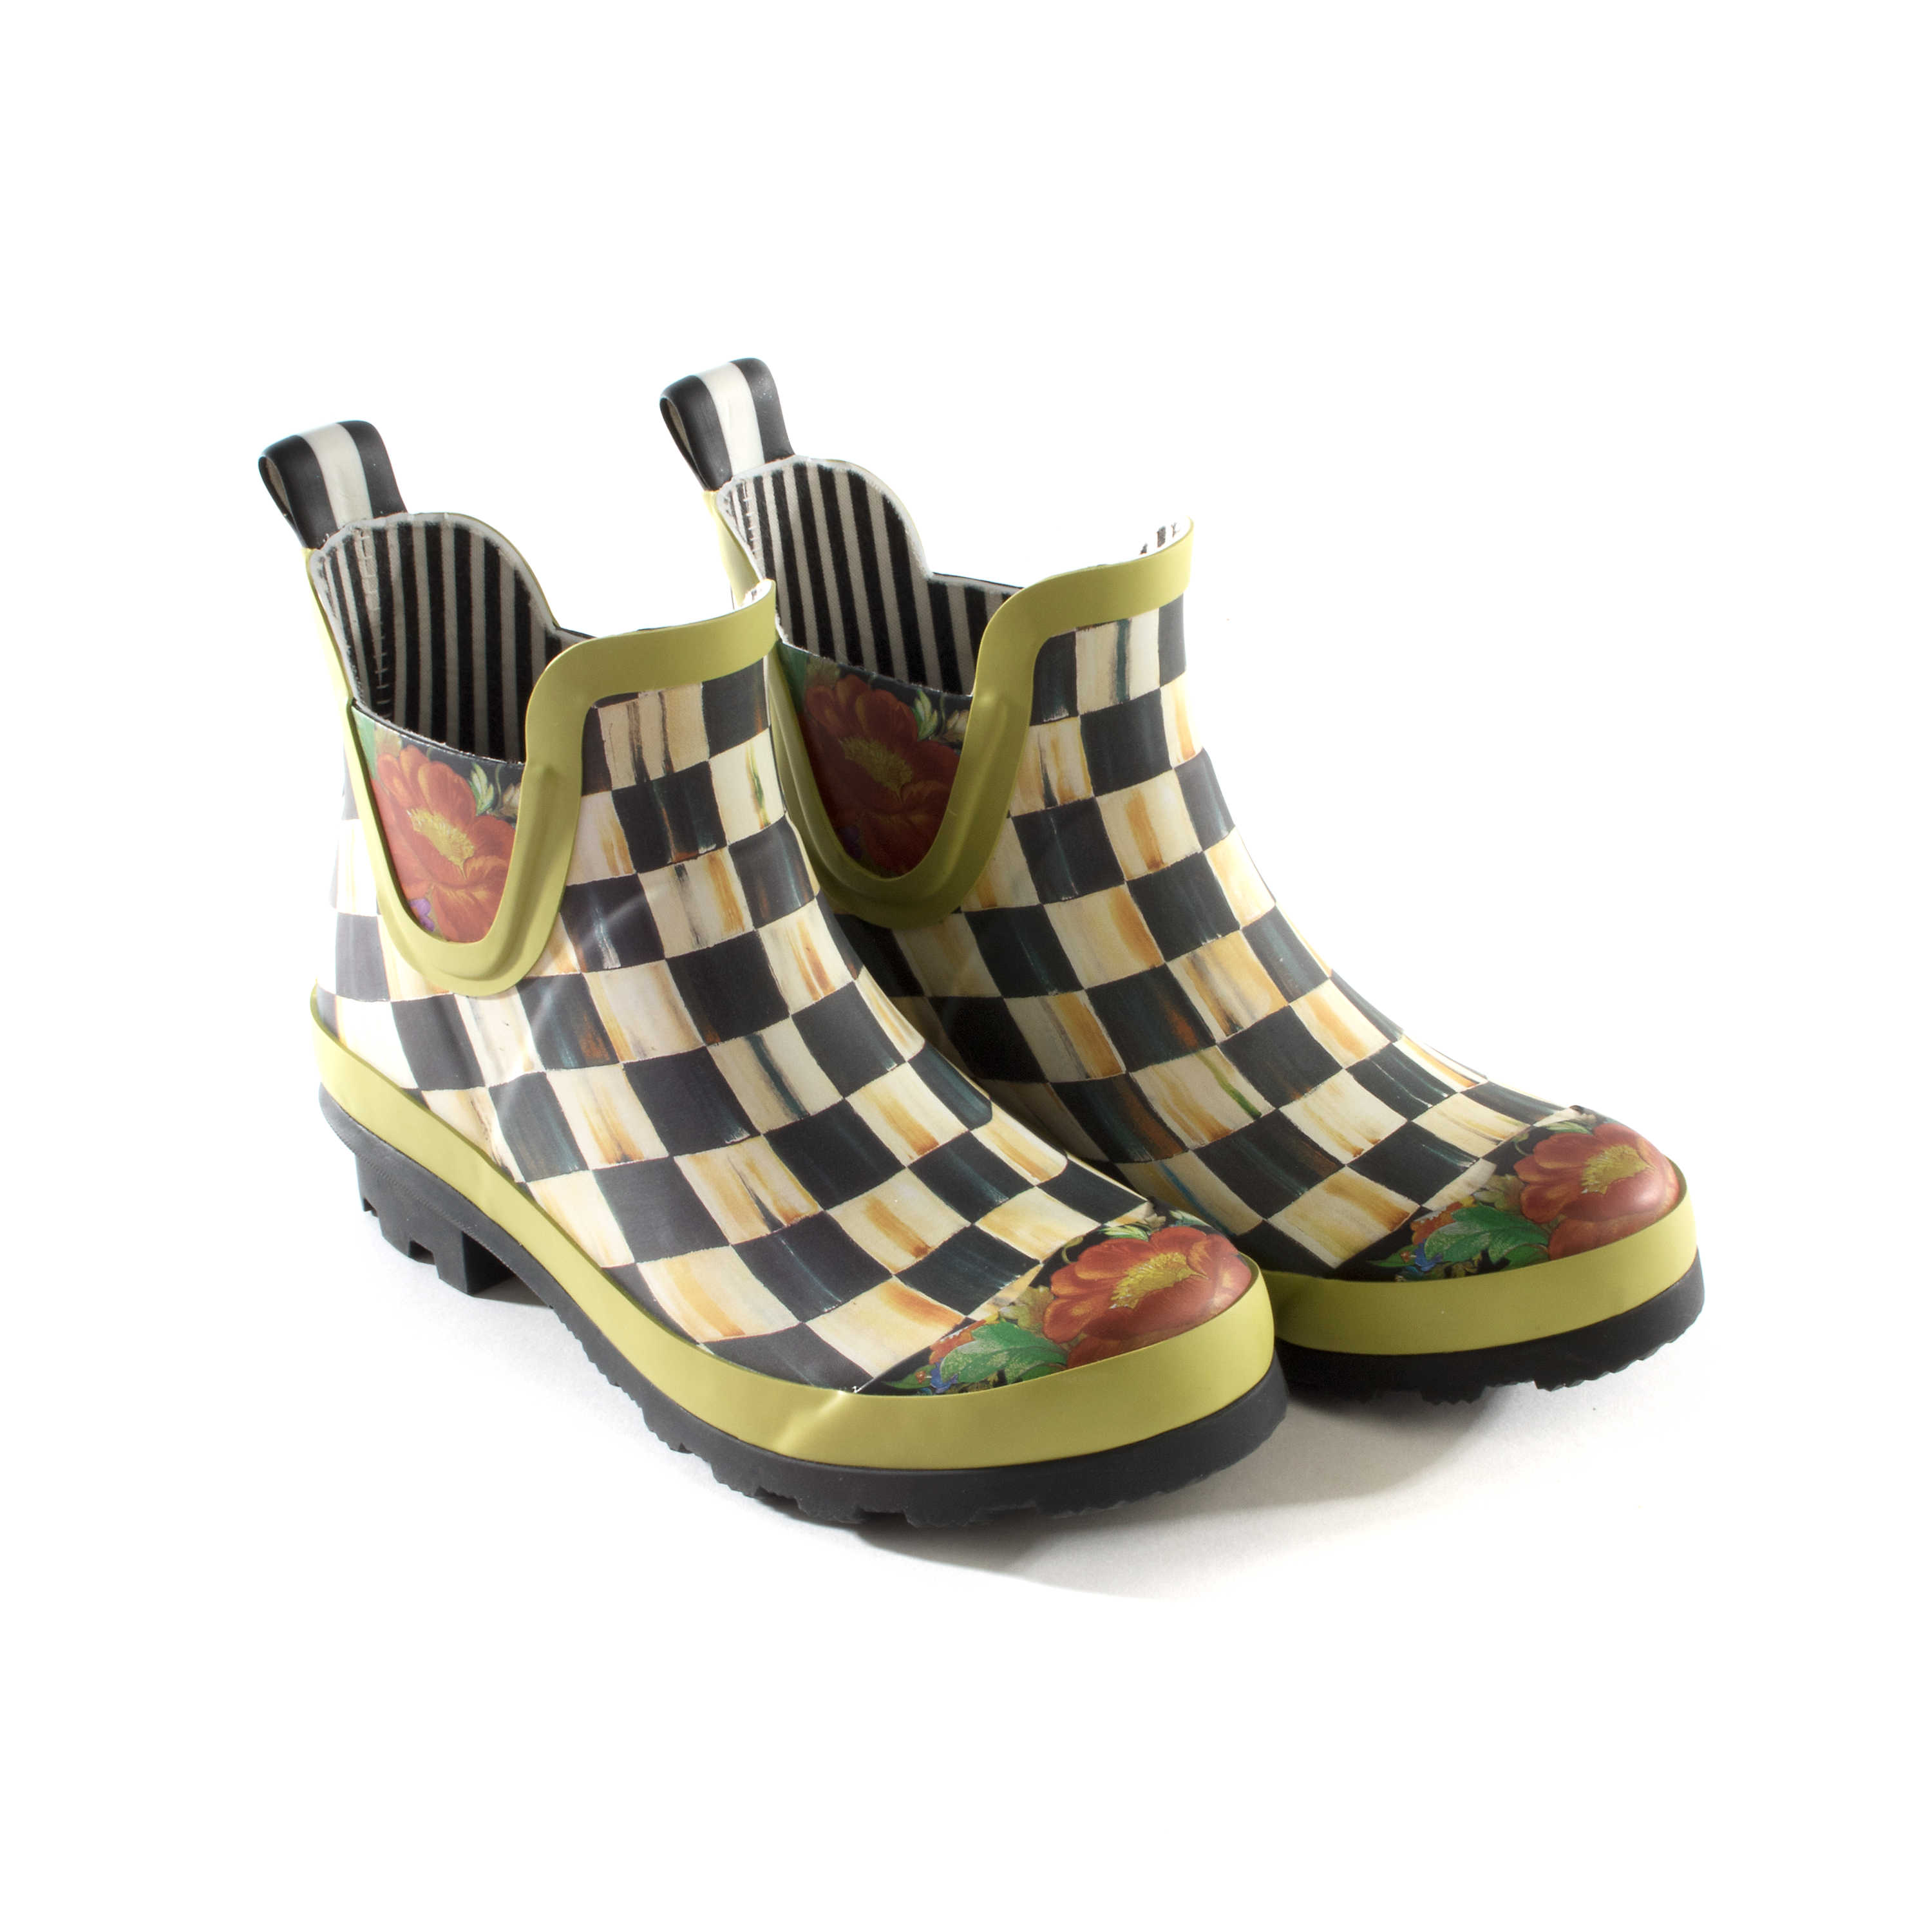 Courtly Check Rain Boots - Short - Size 6 mackenzie-childs Panama 0